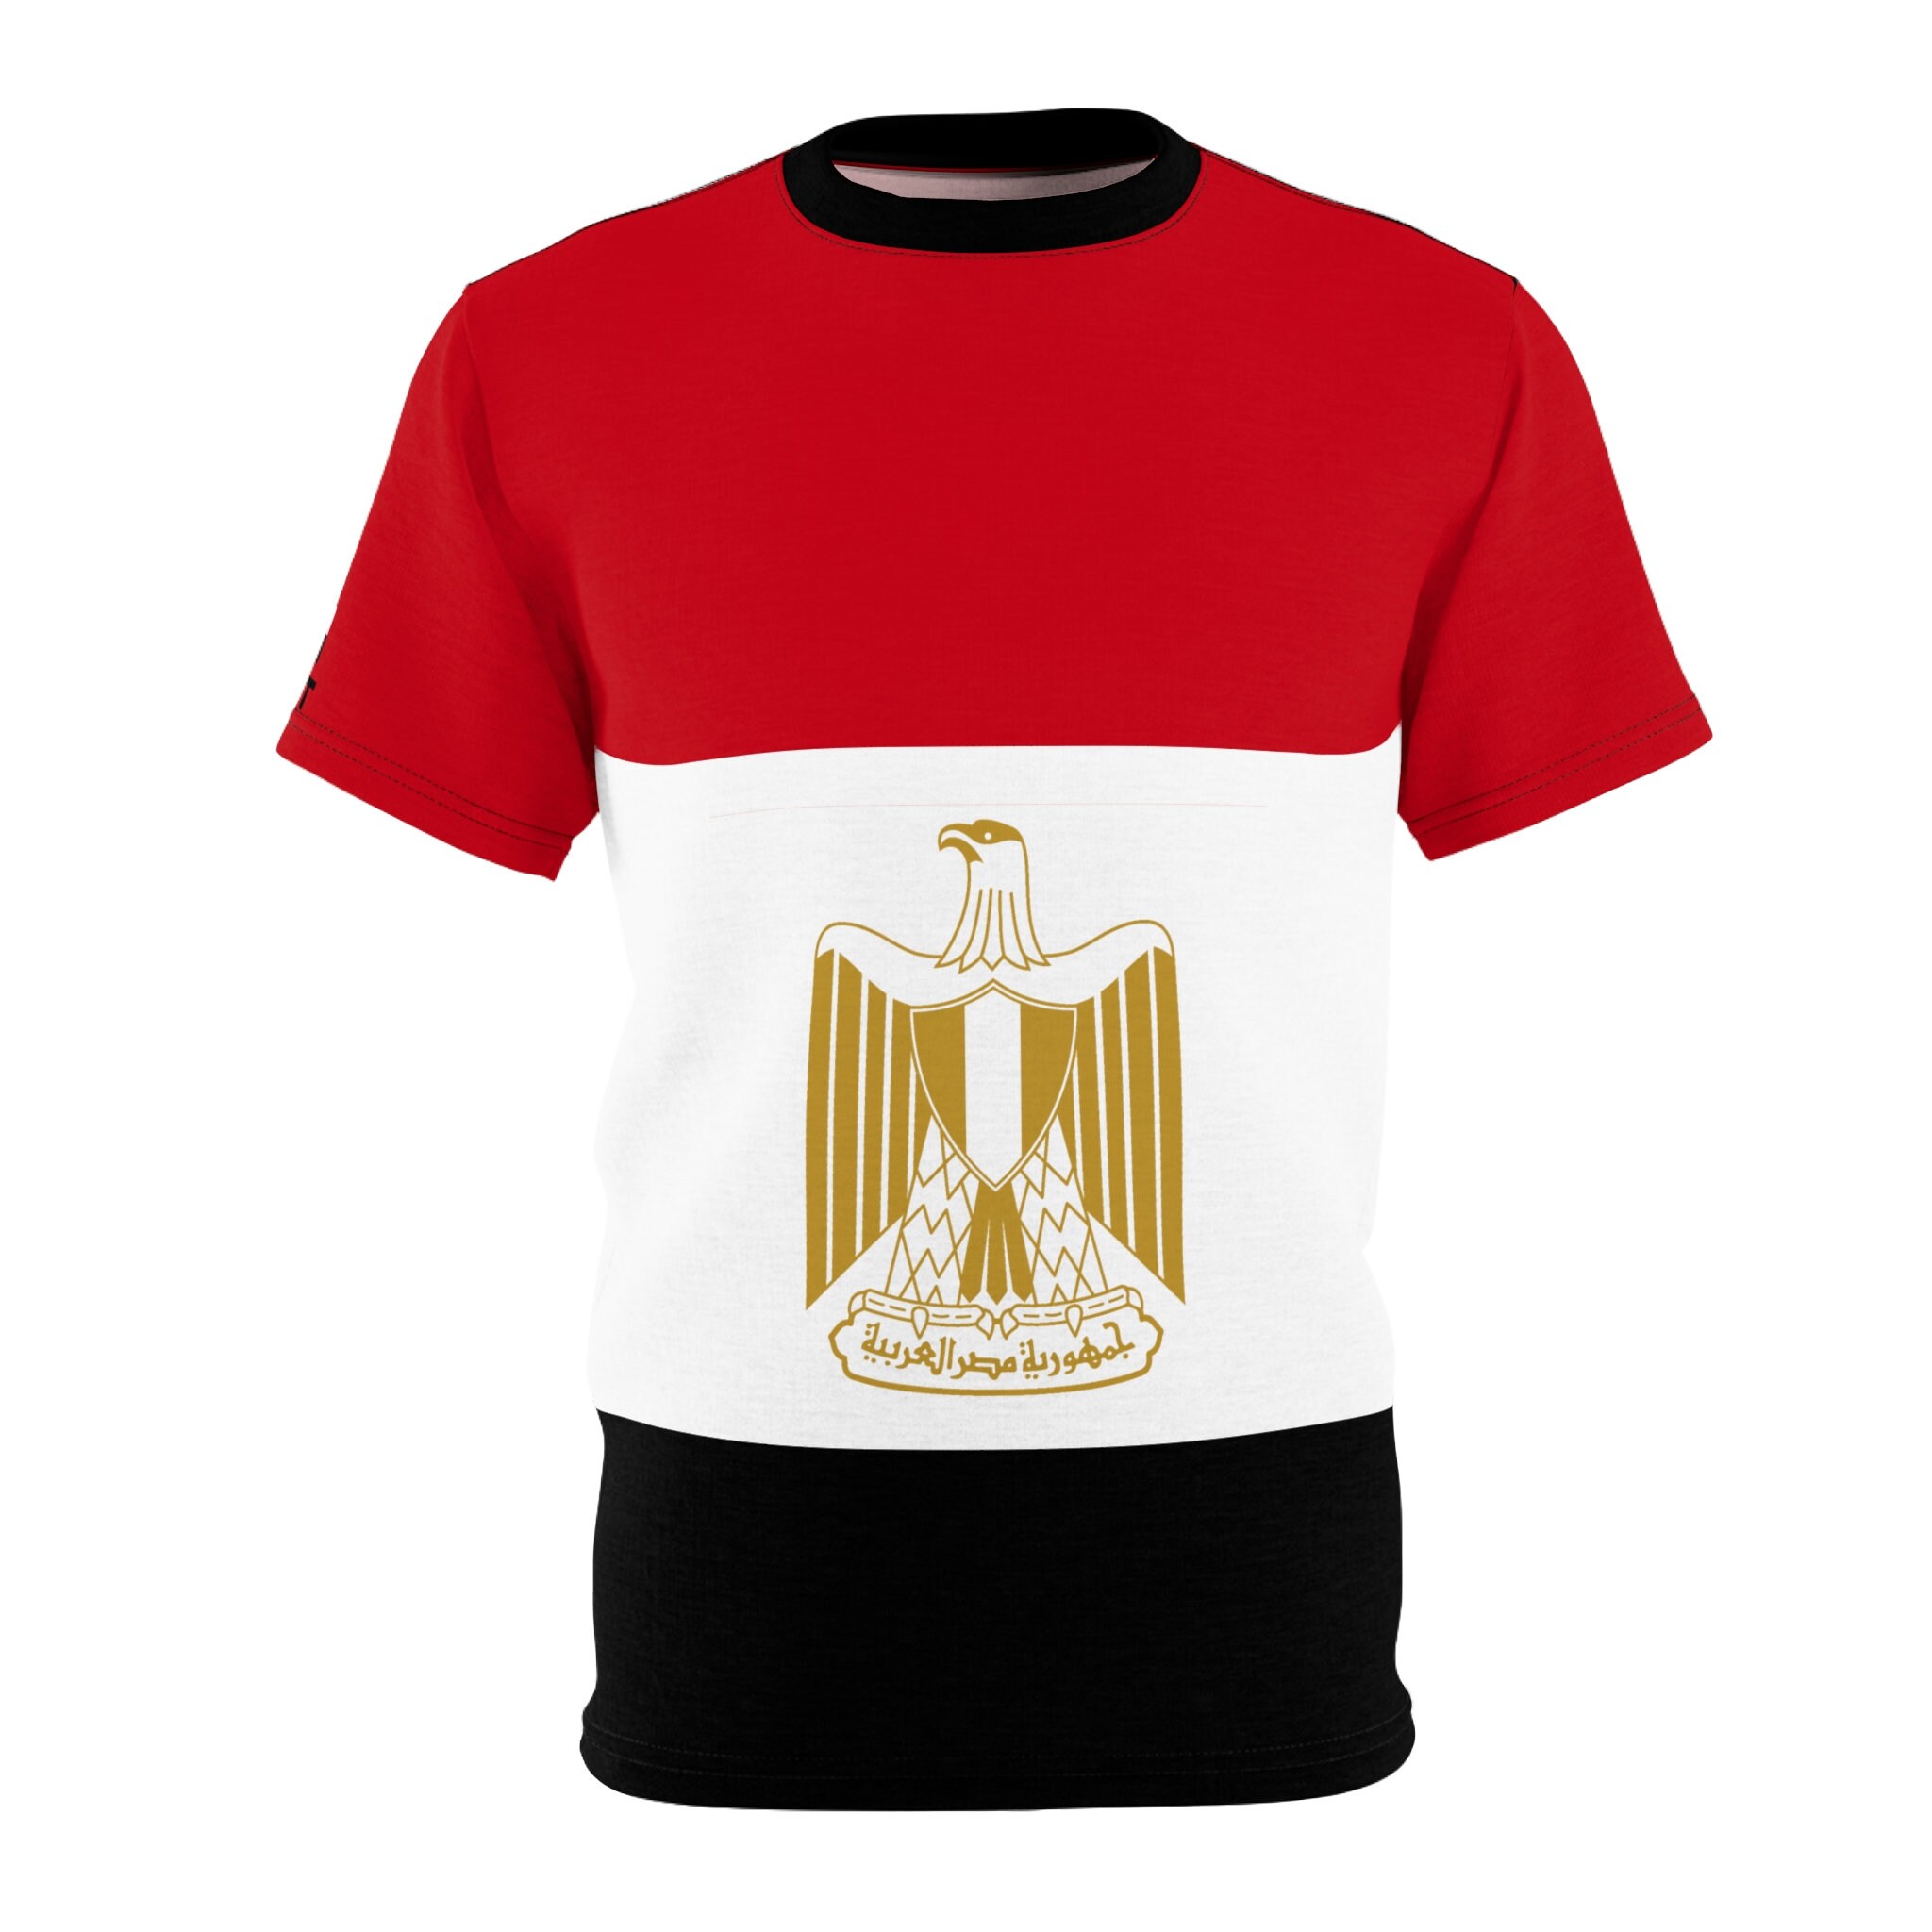 T-shirt Design, Cairo and Egypt Writing Plus the Egyptian Flag